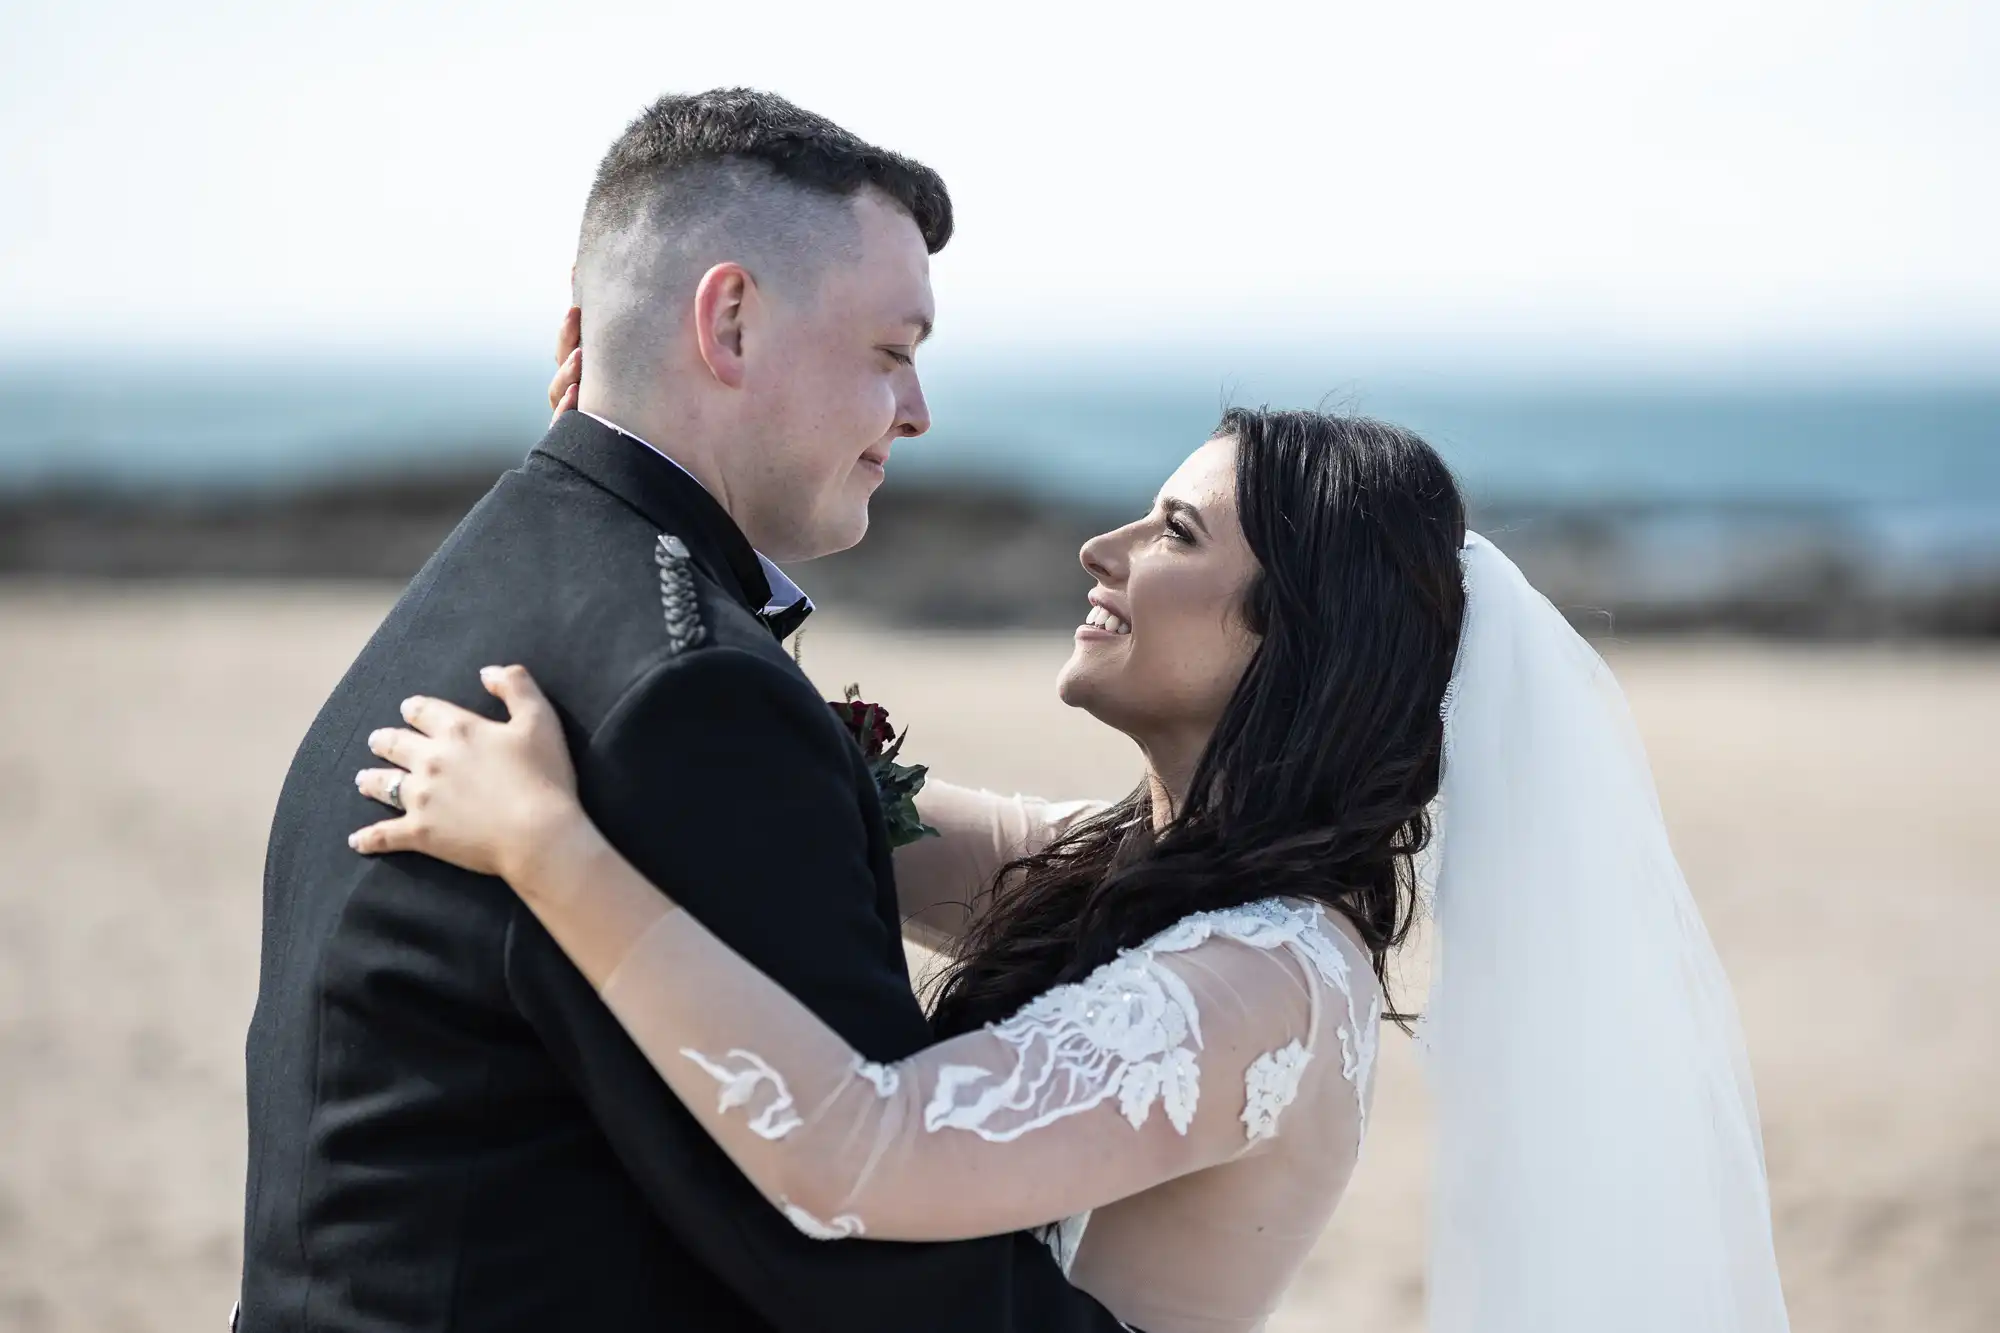 A bride in a lace dress and a groom in a black kilt share a joyful embrace on a sandy beach under a clear sky.